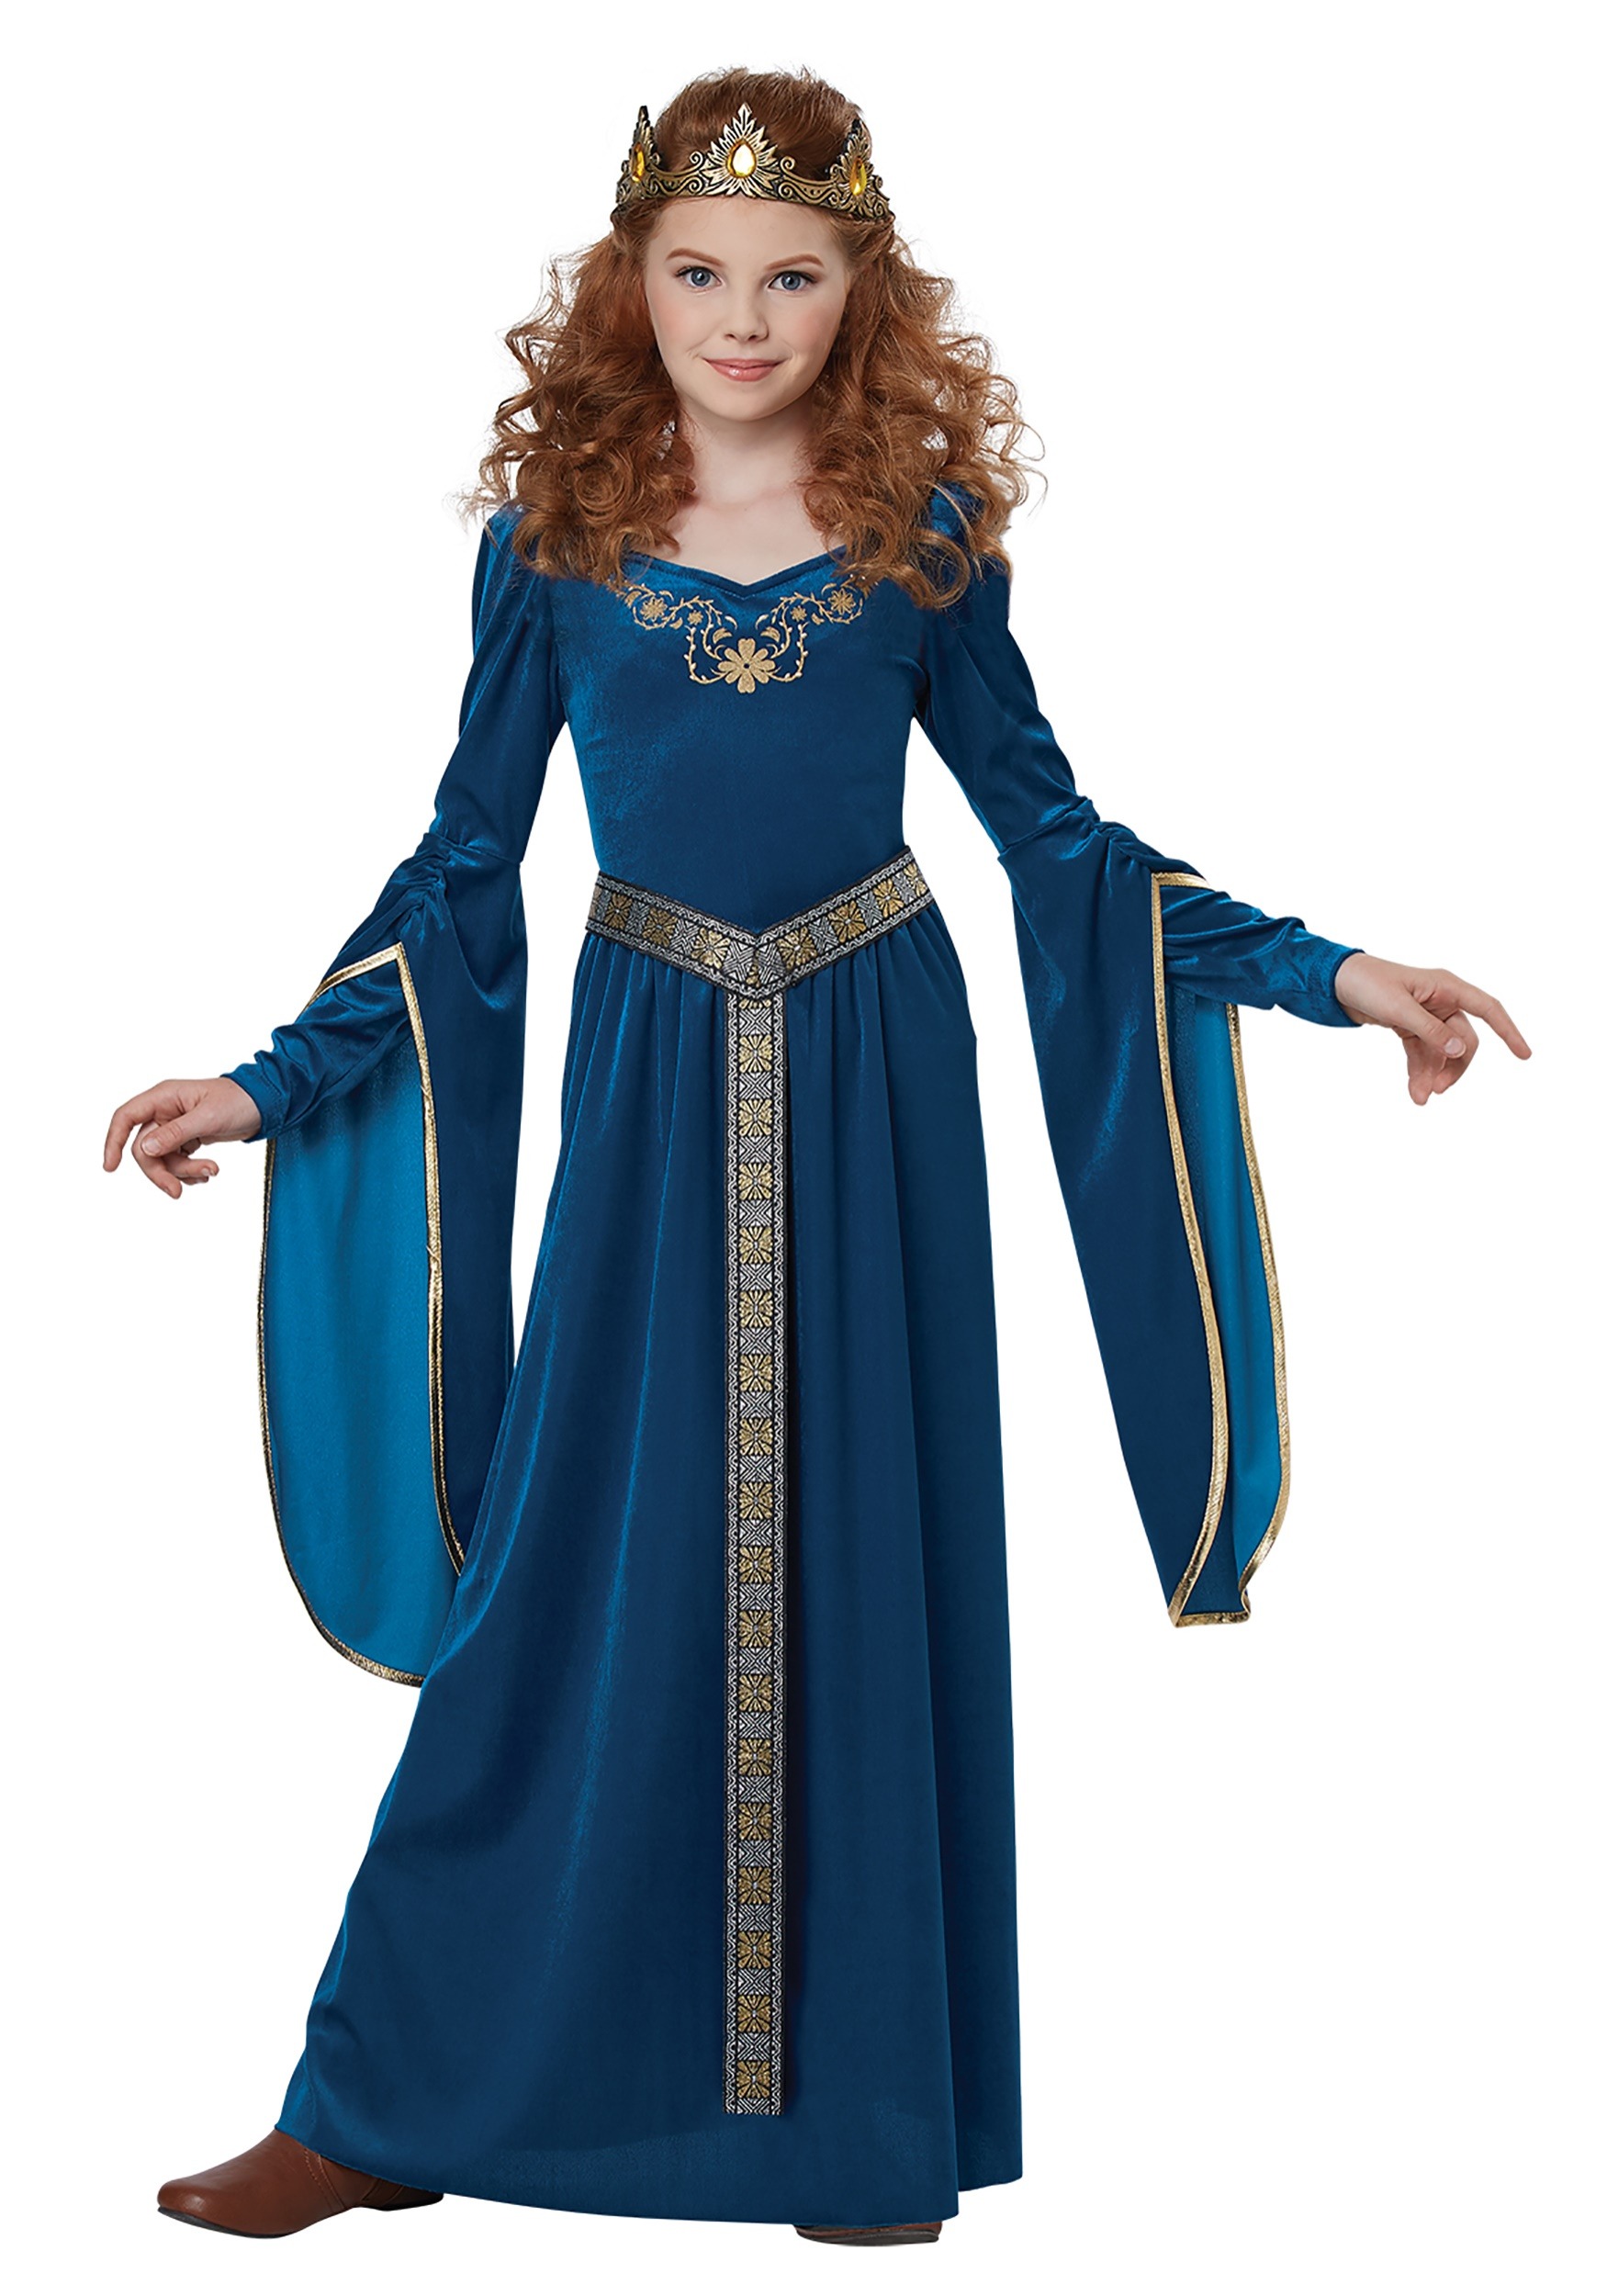 Teal Medieval Princess Girls Costume